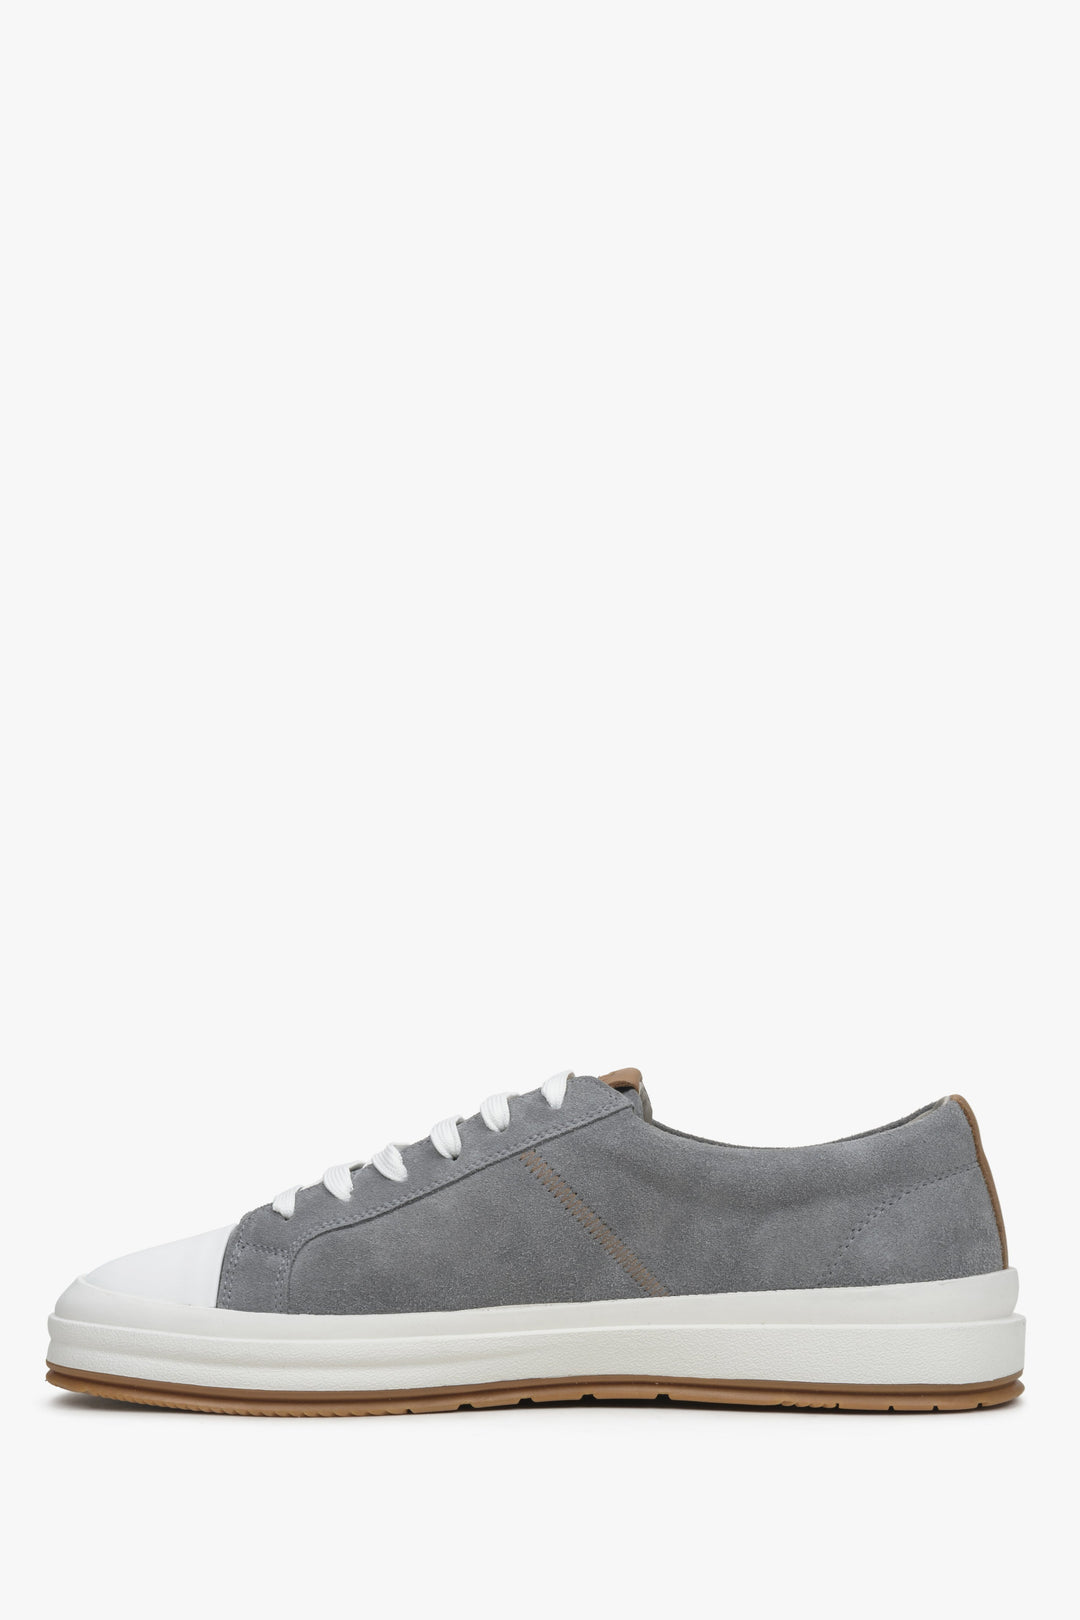 Men's grey velour sneakers by Estro - shoe profile.